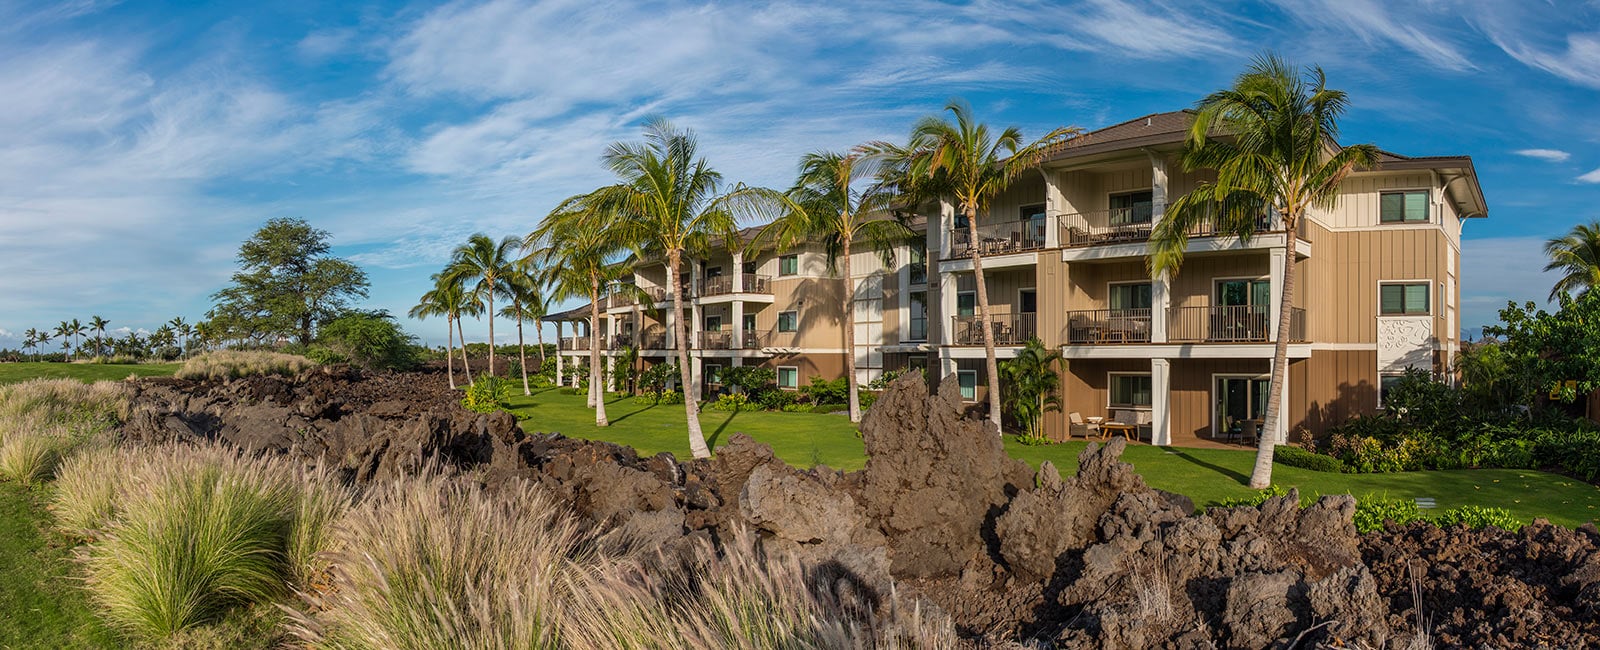 Exterior of Kings' Land Resort in Waikoloa, Hawaii